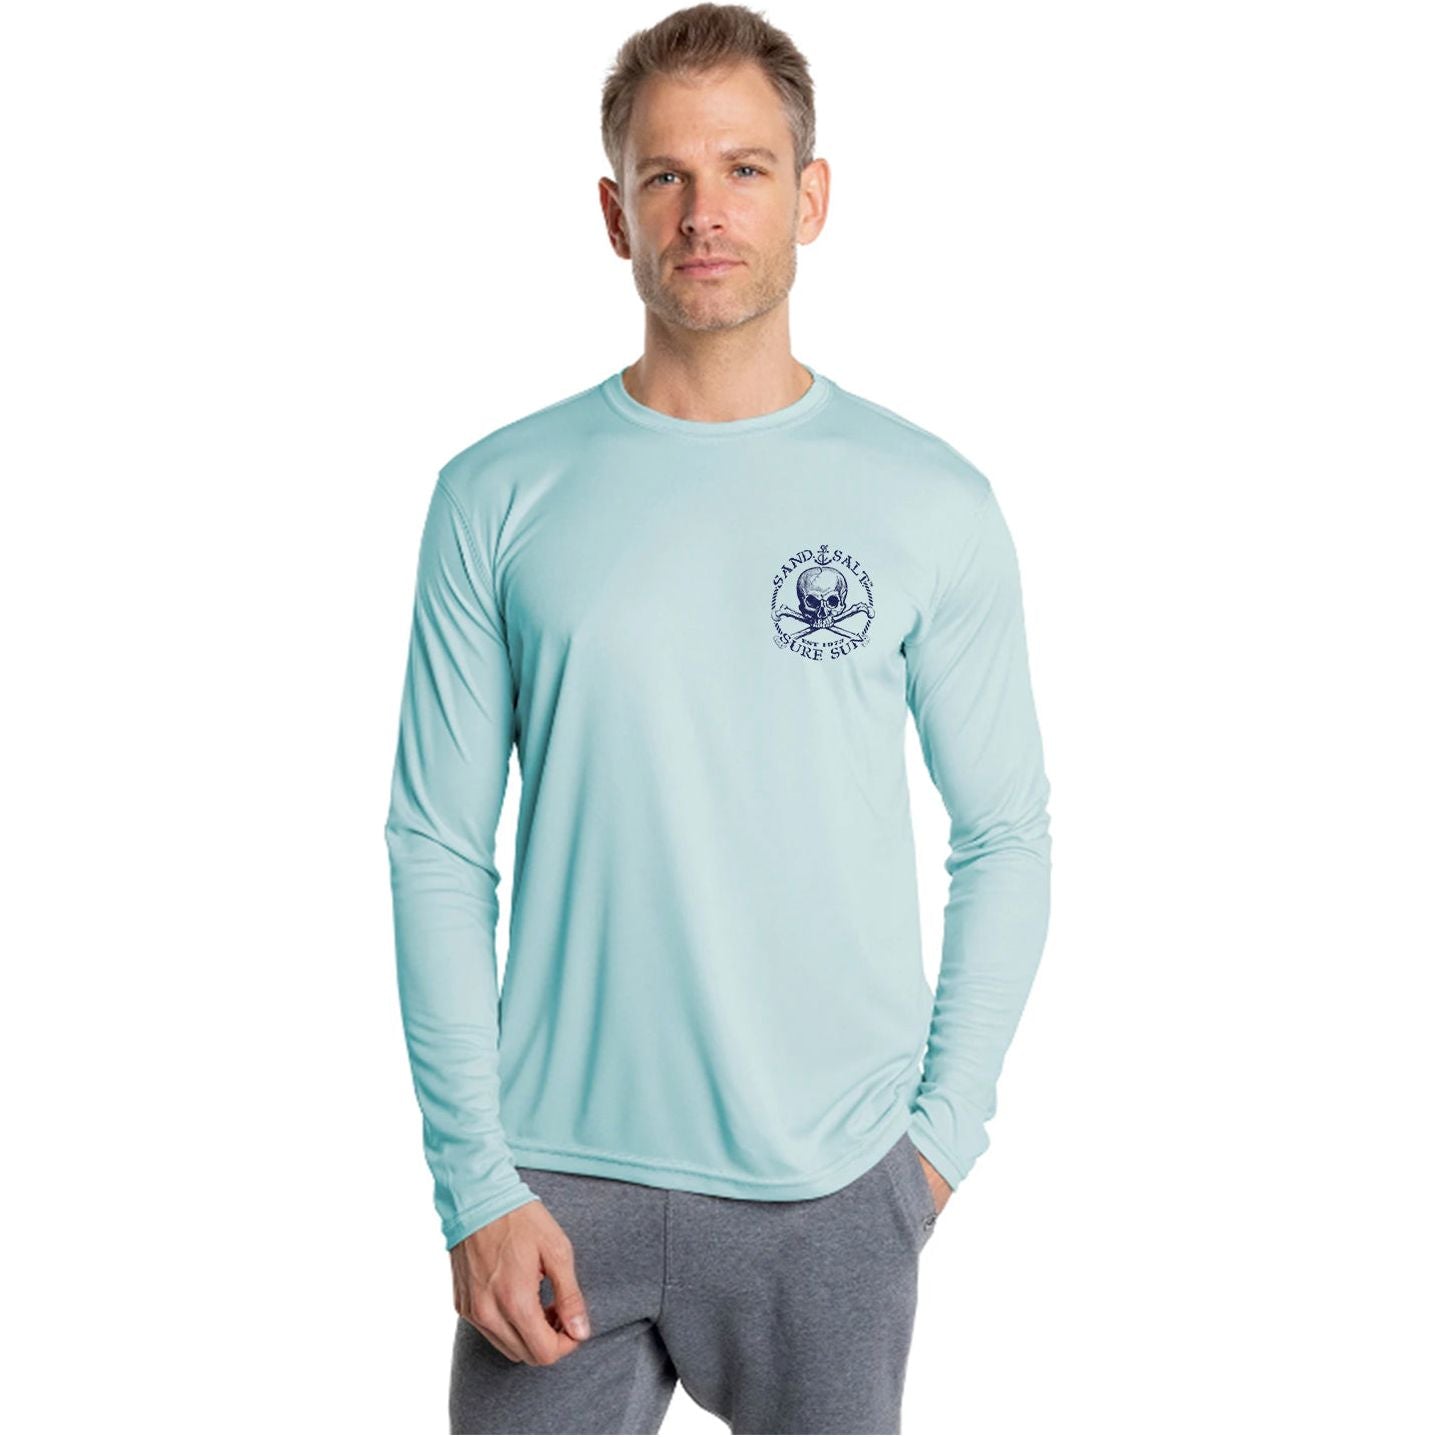 Marlin Fishing Shirt for Men Long Sleeve Sun Protection UV UPF 30+ T-shirts TTS0061 Long Sleeves UPF / S